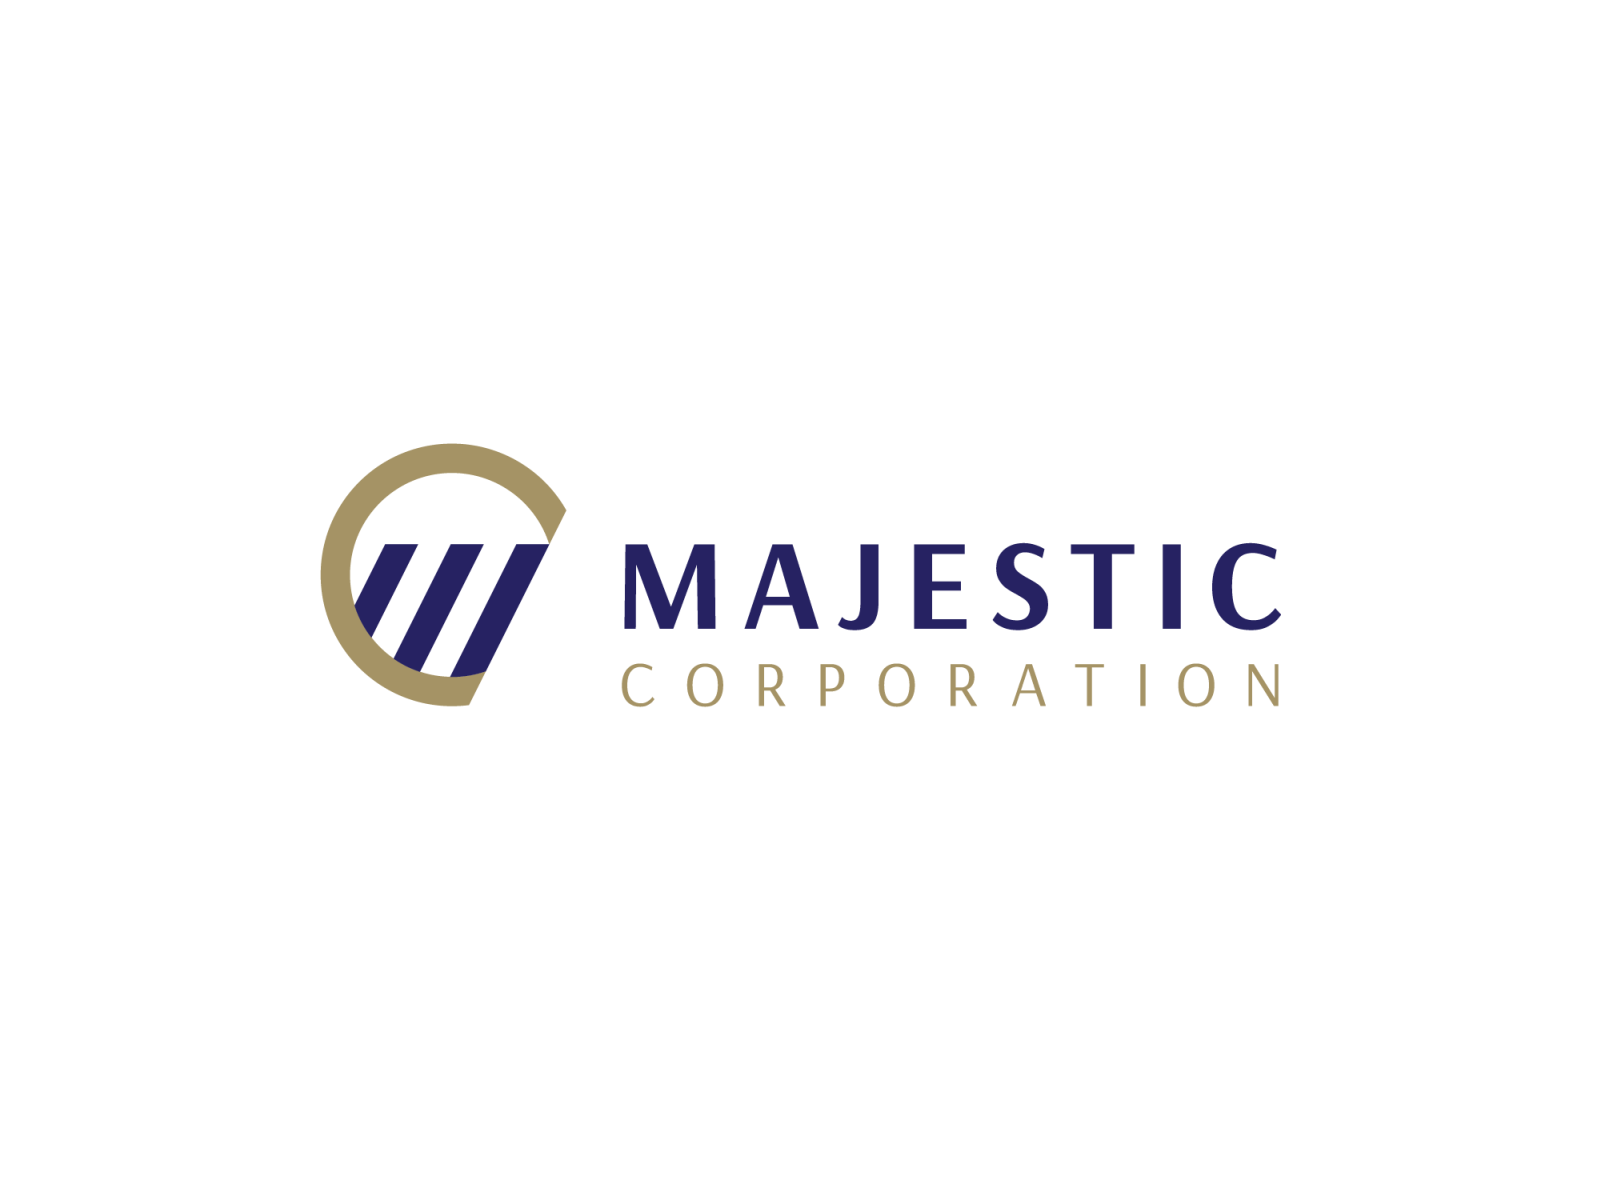 Majestic corporation by Dominika Berkiová on Dribbble